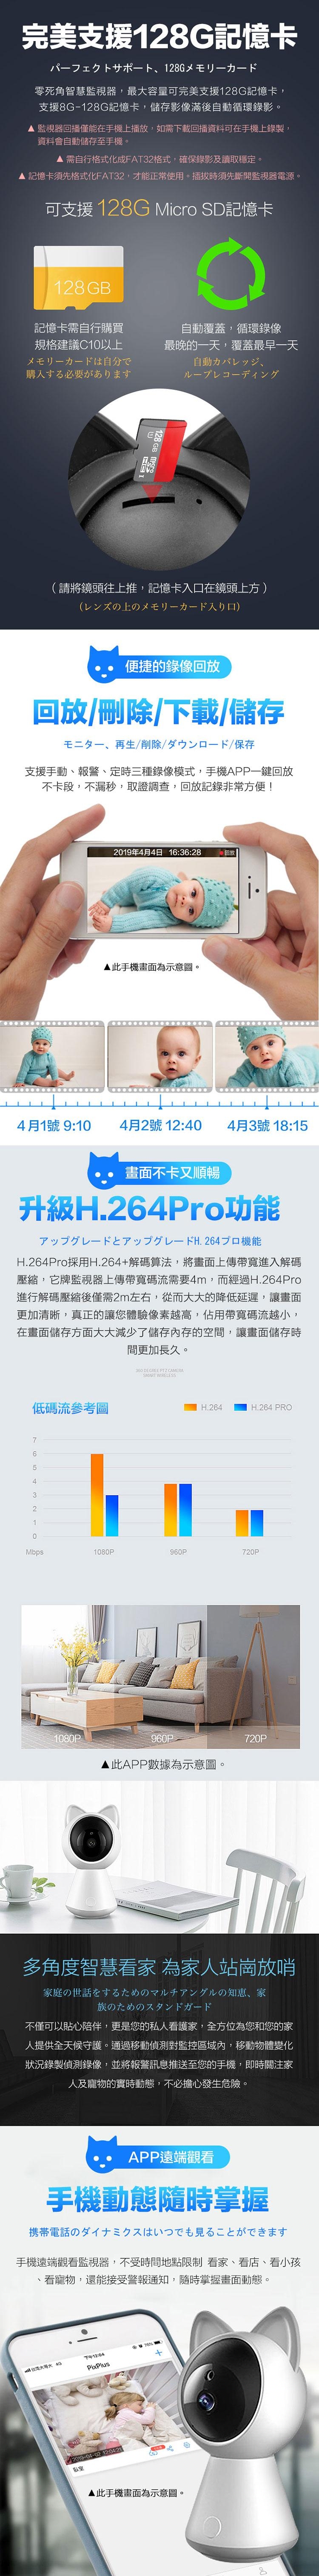 【uta】萌貓造型1080P無線網路旋轉監視器Cat1(升級版)白色